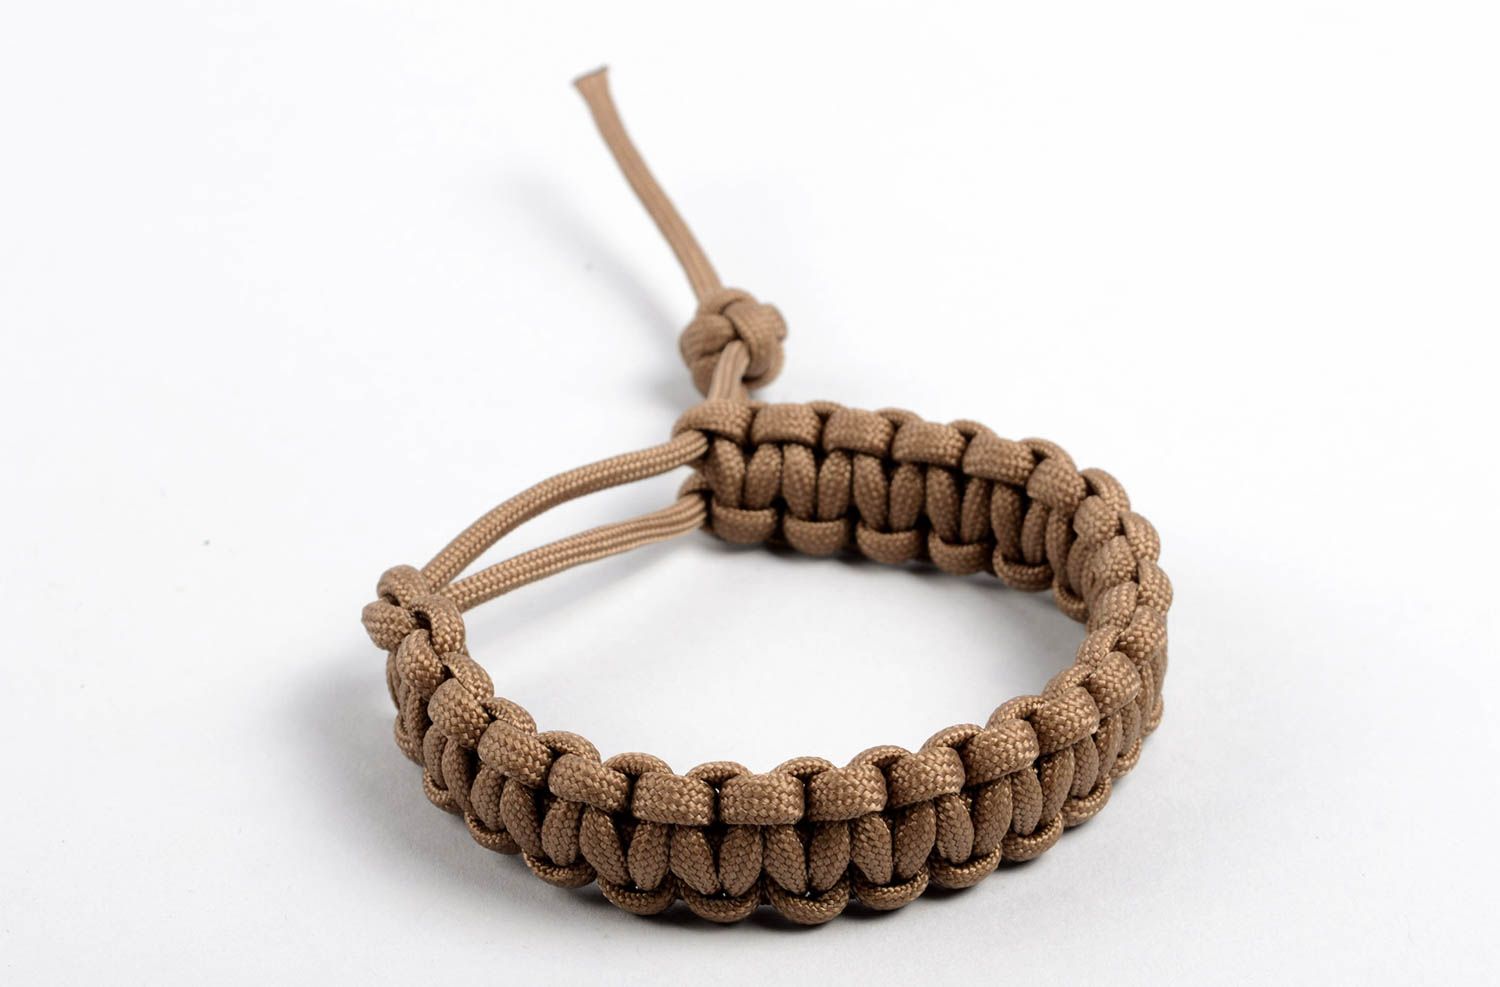 Stylish handmade woven bracelet paracord bracelet textile jewelry designs photo 1